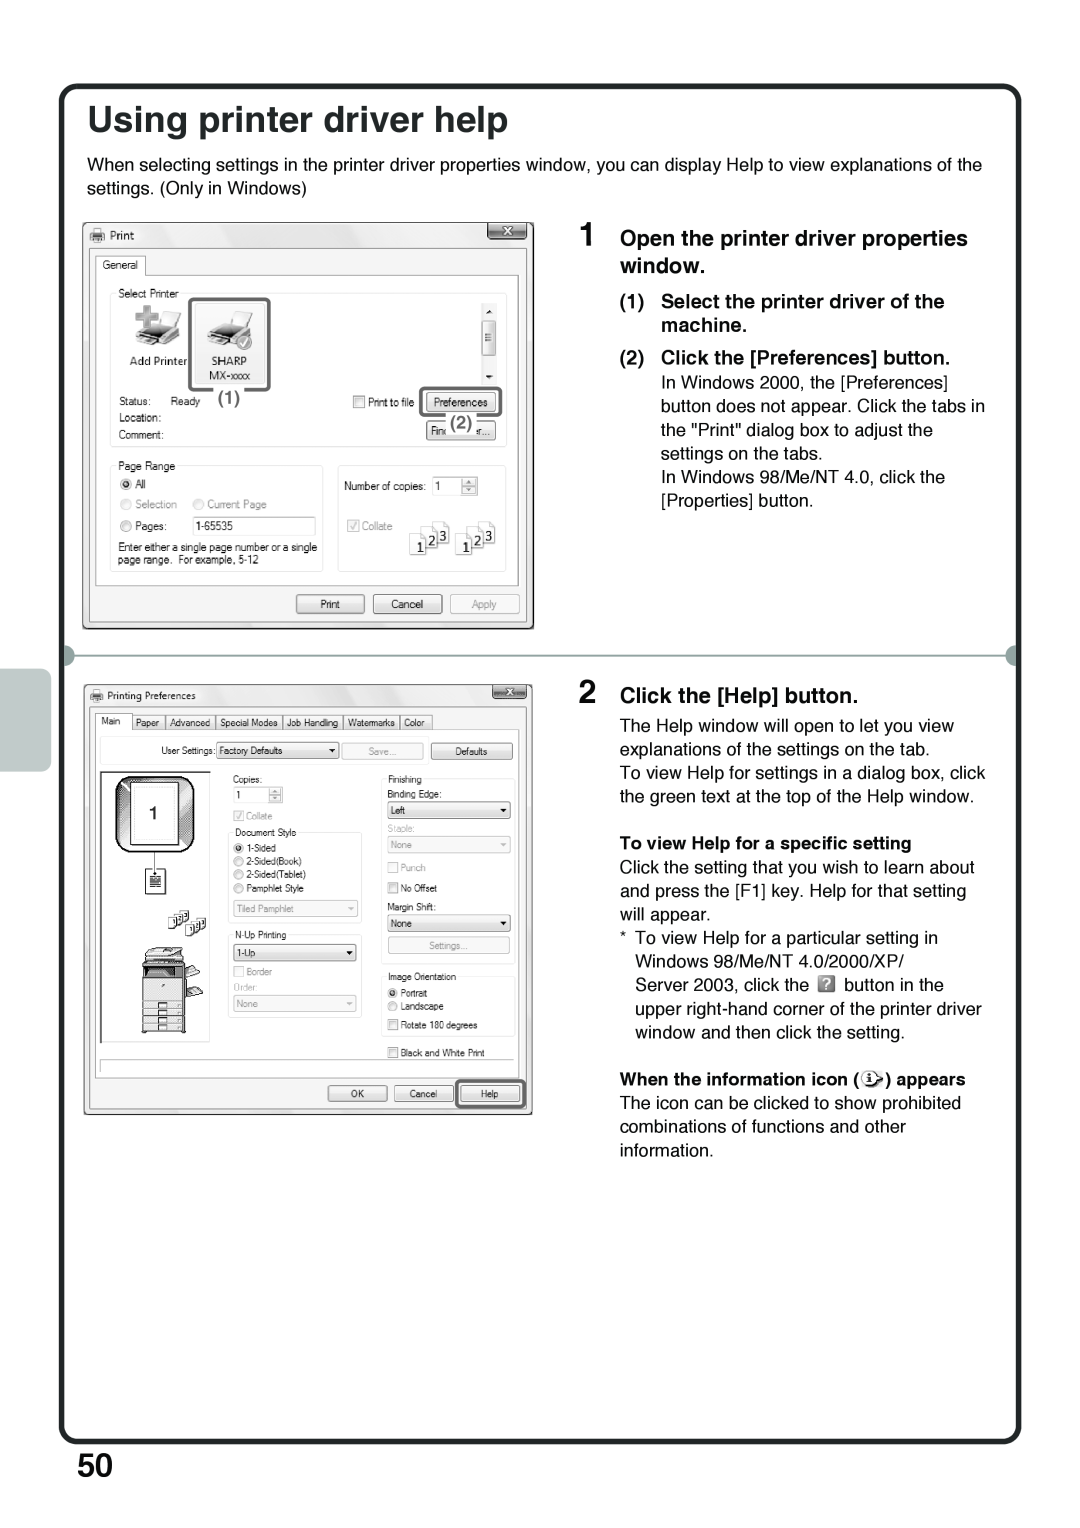 Sharp MX-4100N, MX-5000N Using printer driver help, Open the printer driver properties window, Click the Help button 